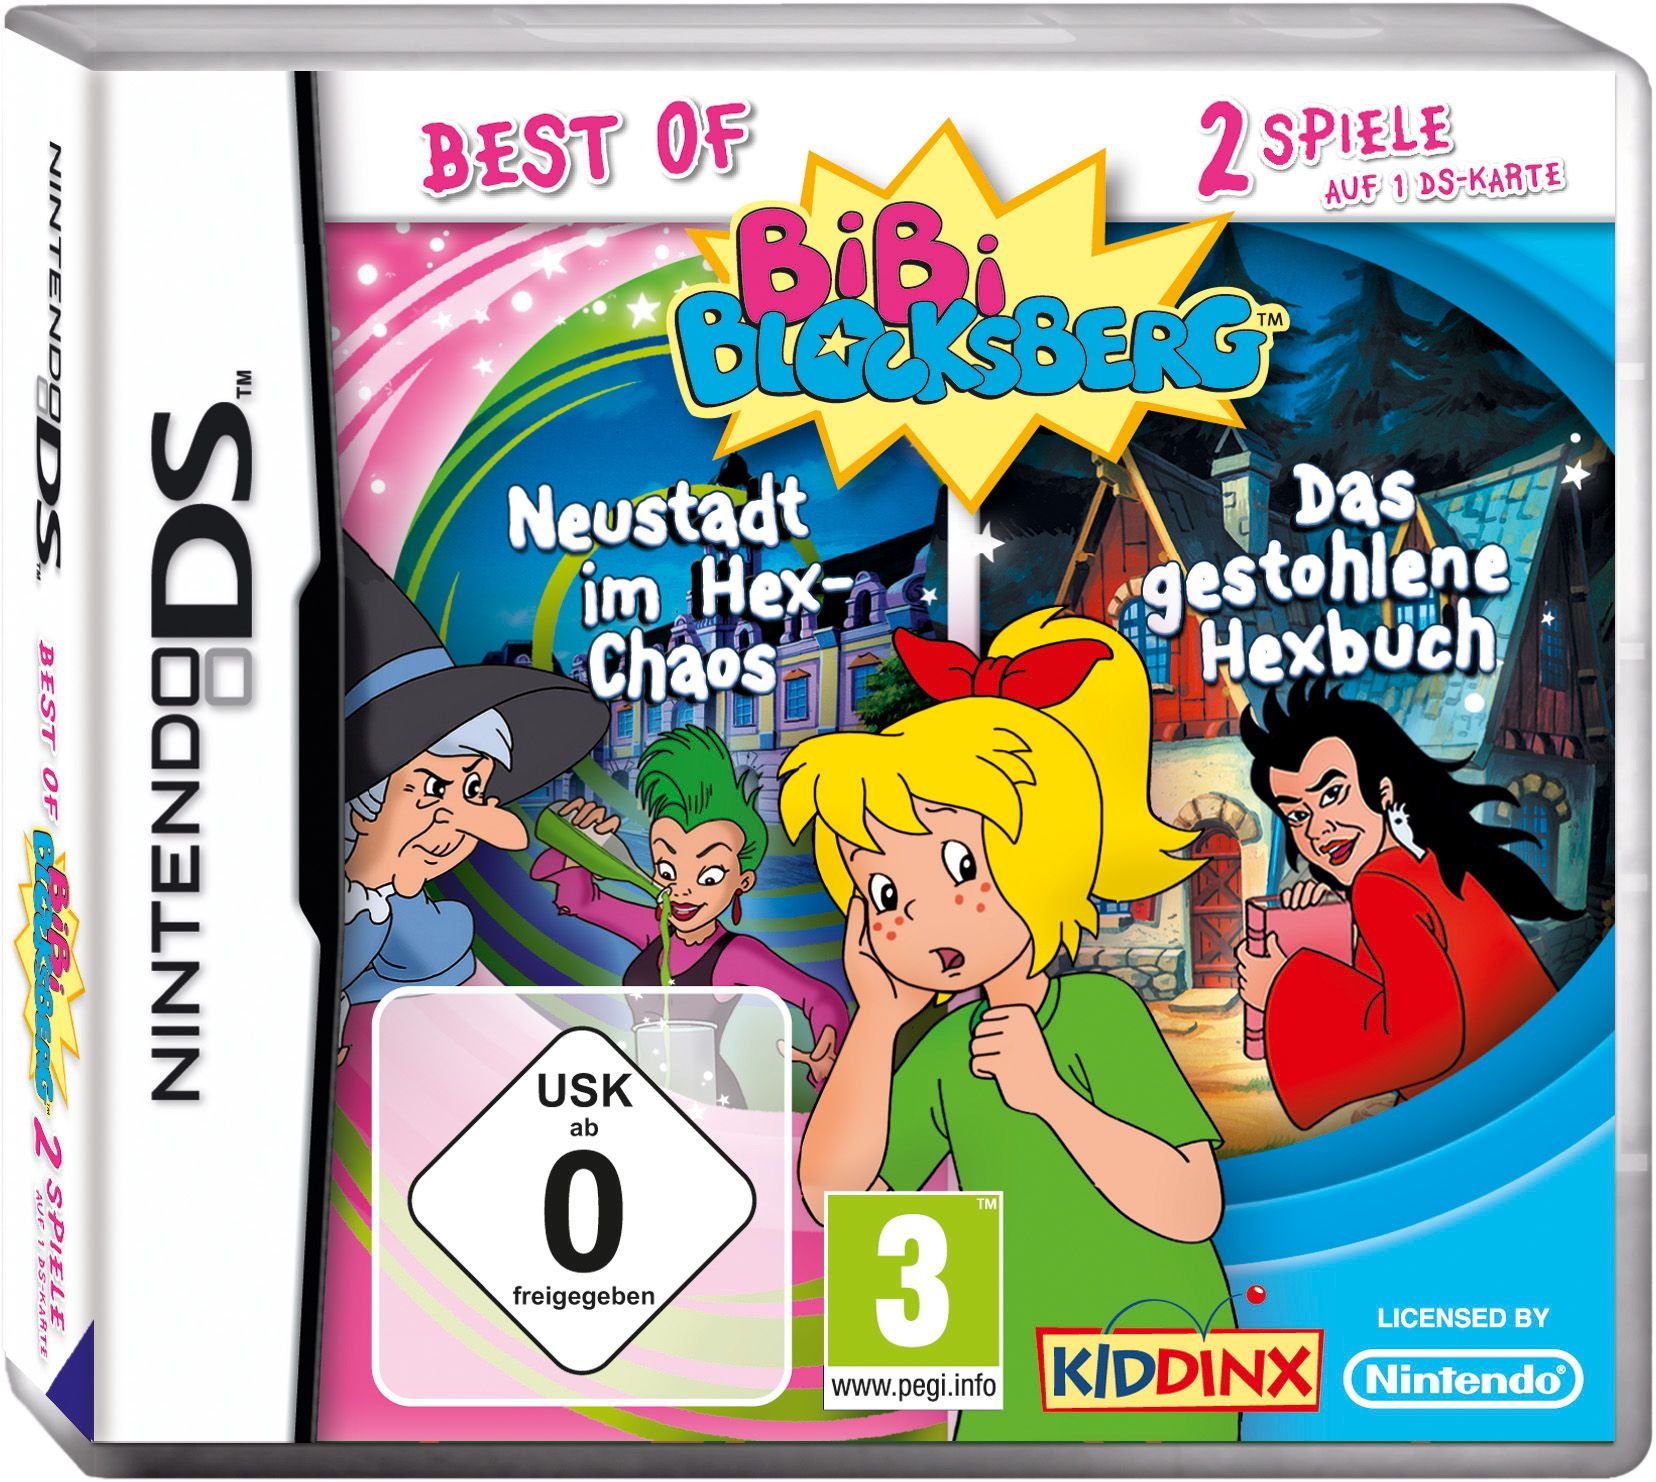 Best of Bibi Blocksberg (Neustadt im Hex - Chaos/ Das gestohlene Hexbuch) - [Nintendo DS]